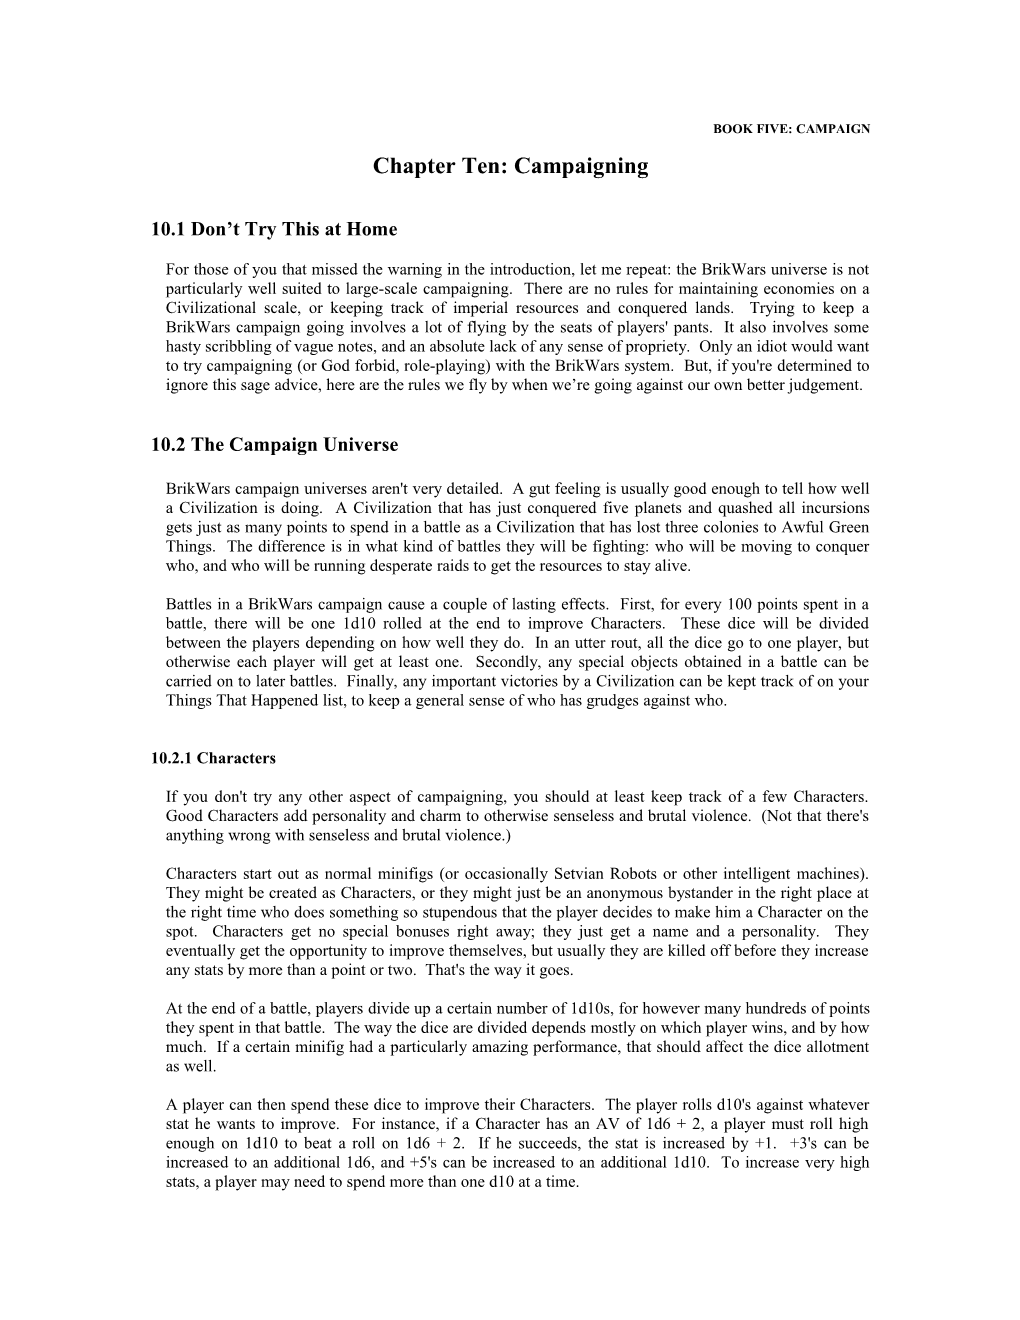 Brikwars Chapter Ten: Campaigning